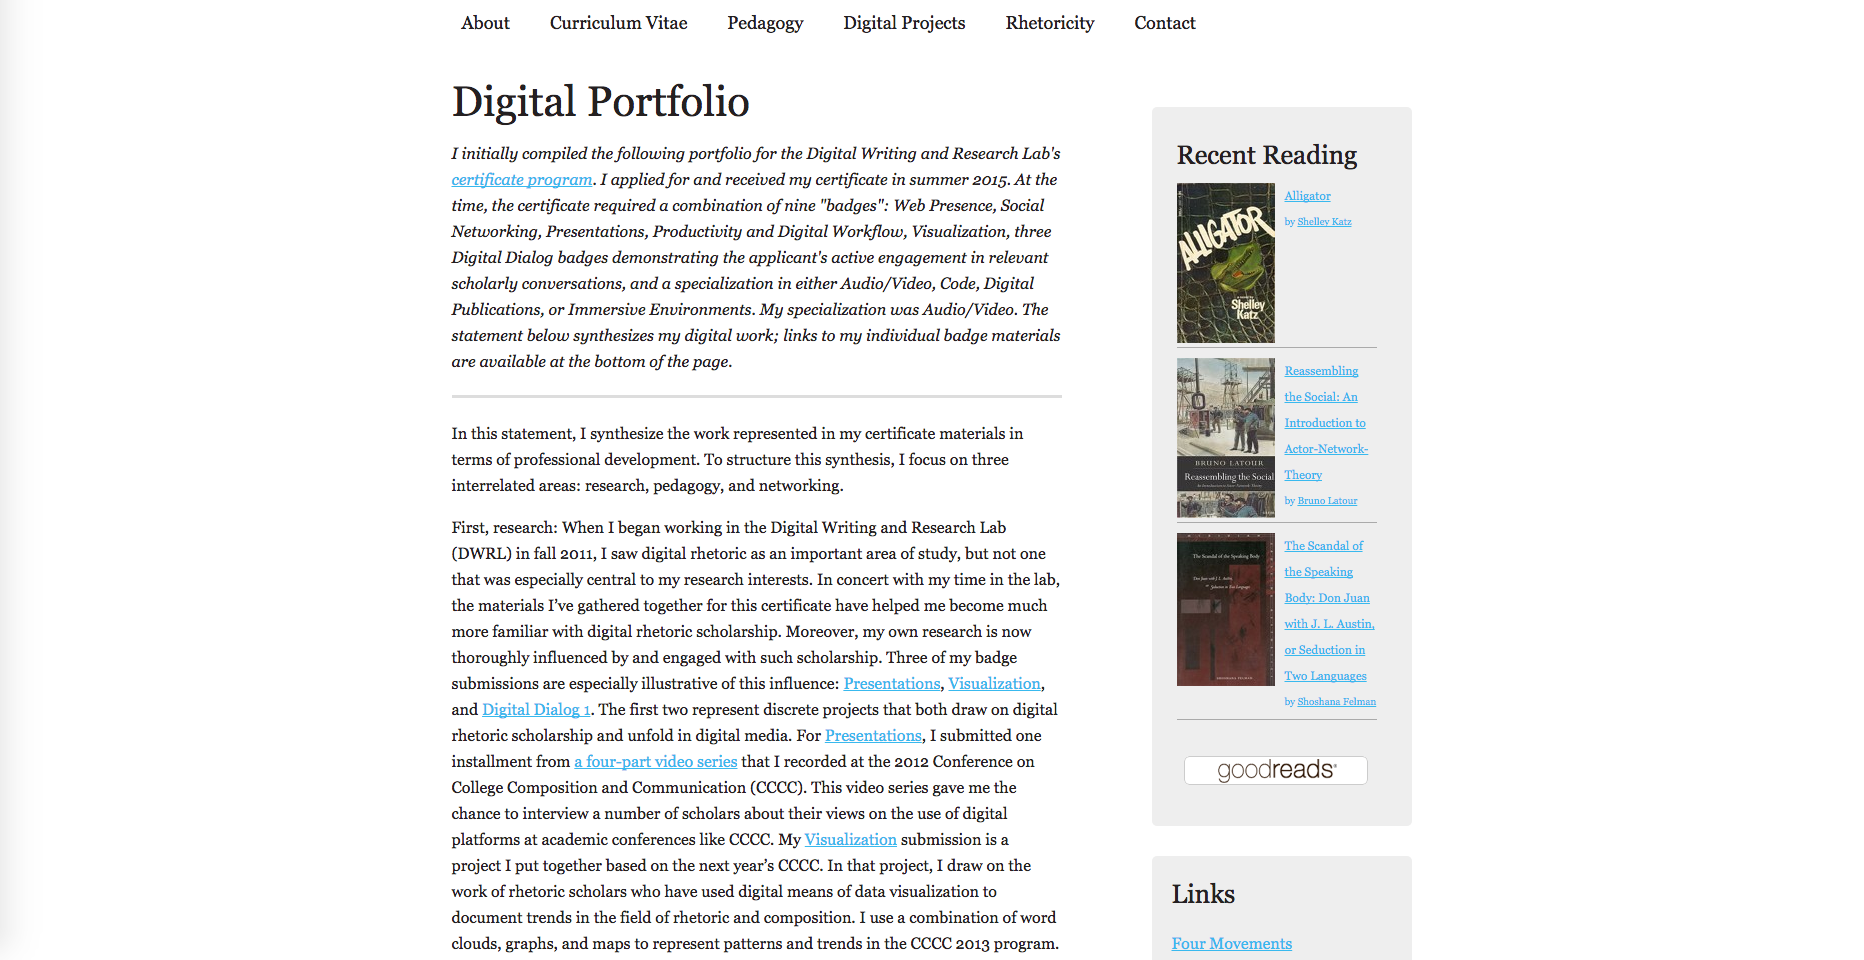 Eric Detweiler's online portfolio